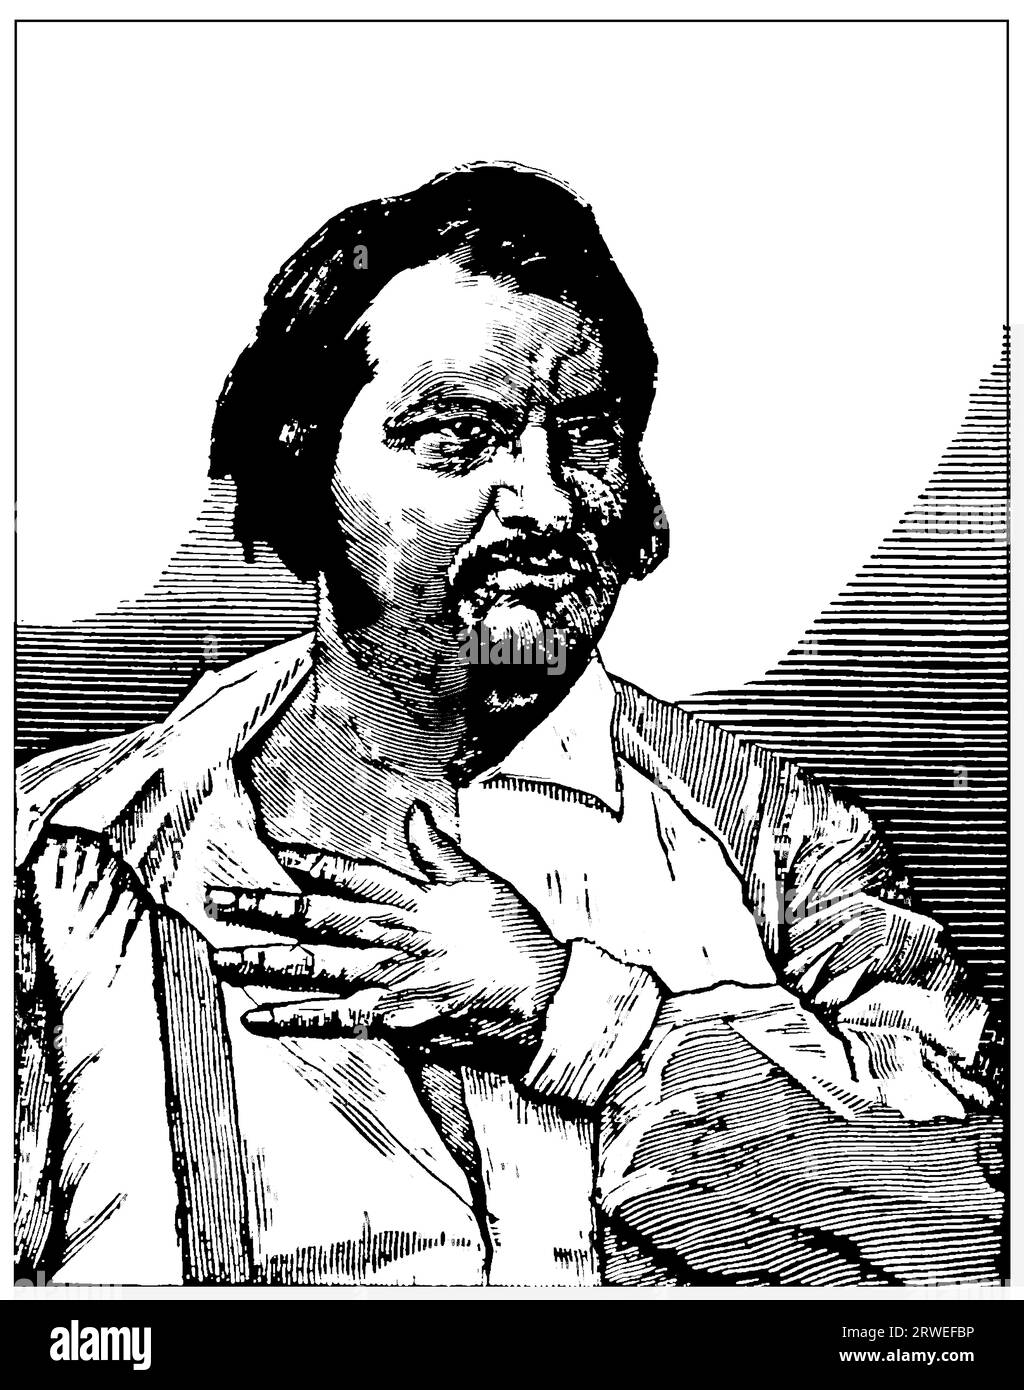 Portrait of Balzac, French Novelist - Vintage Illustration Stock Photo